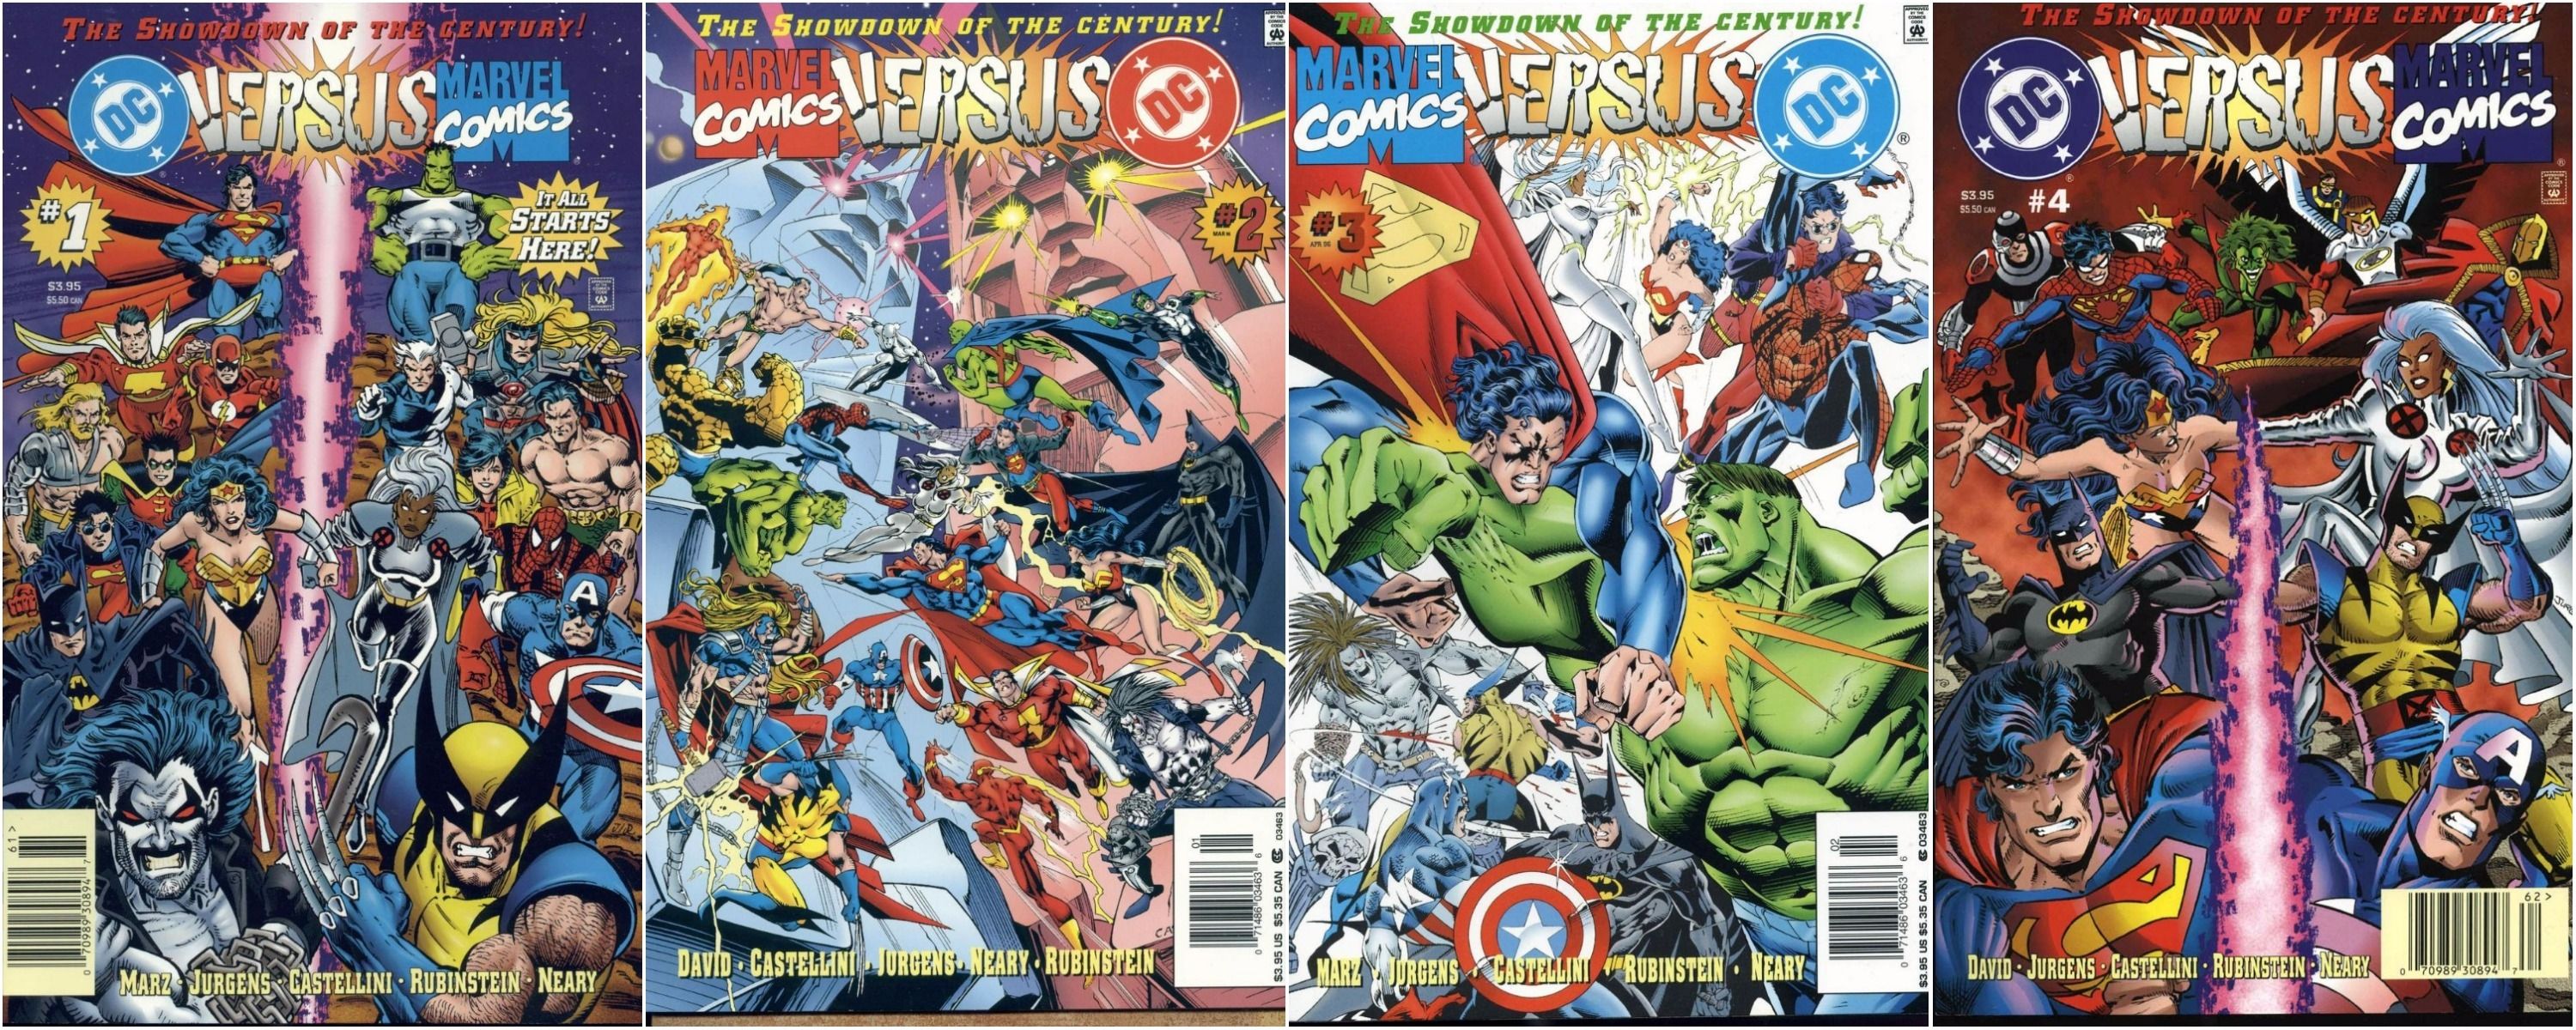 Marvel vs DC Covers 1-4